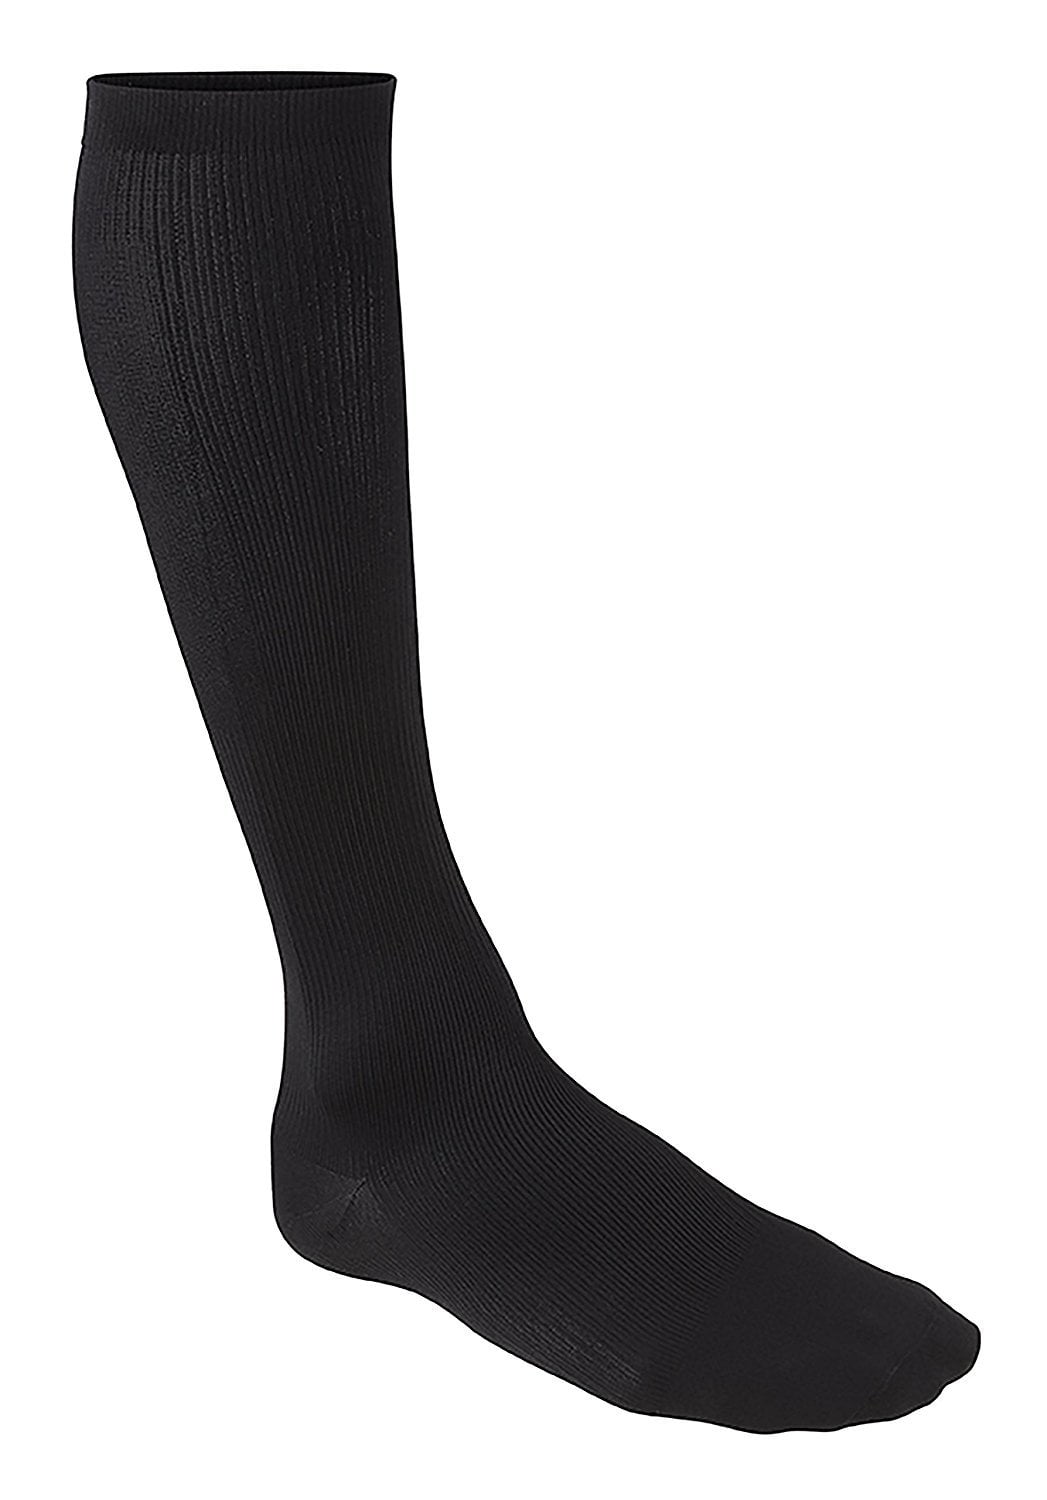 futuro revitalizing dress socks for men, helps relieve symptoms of mild ...